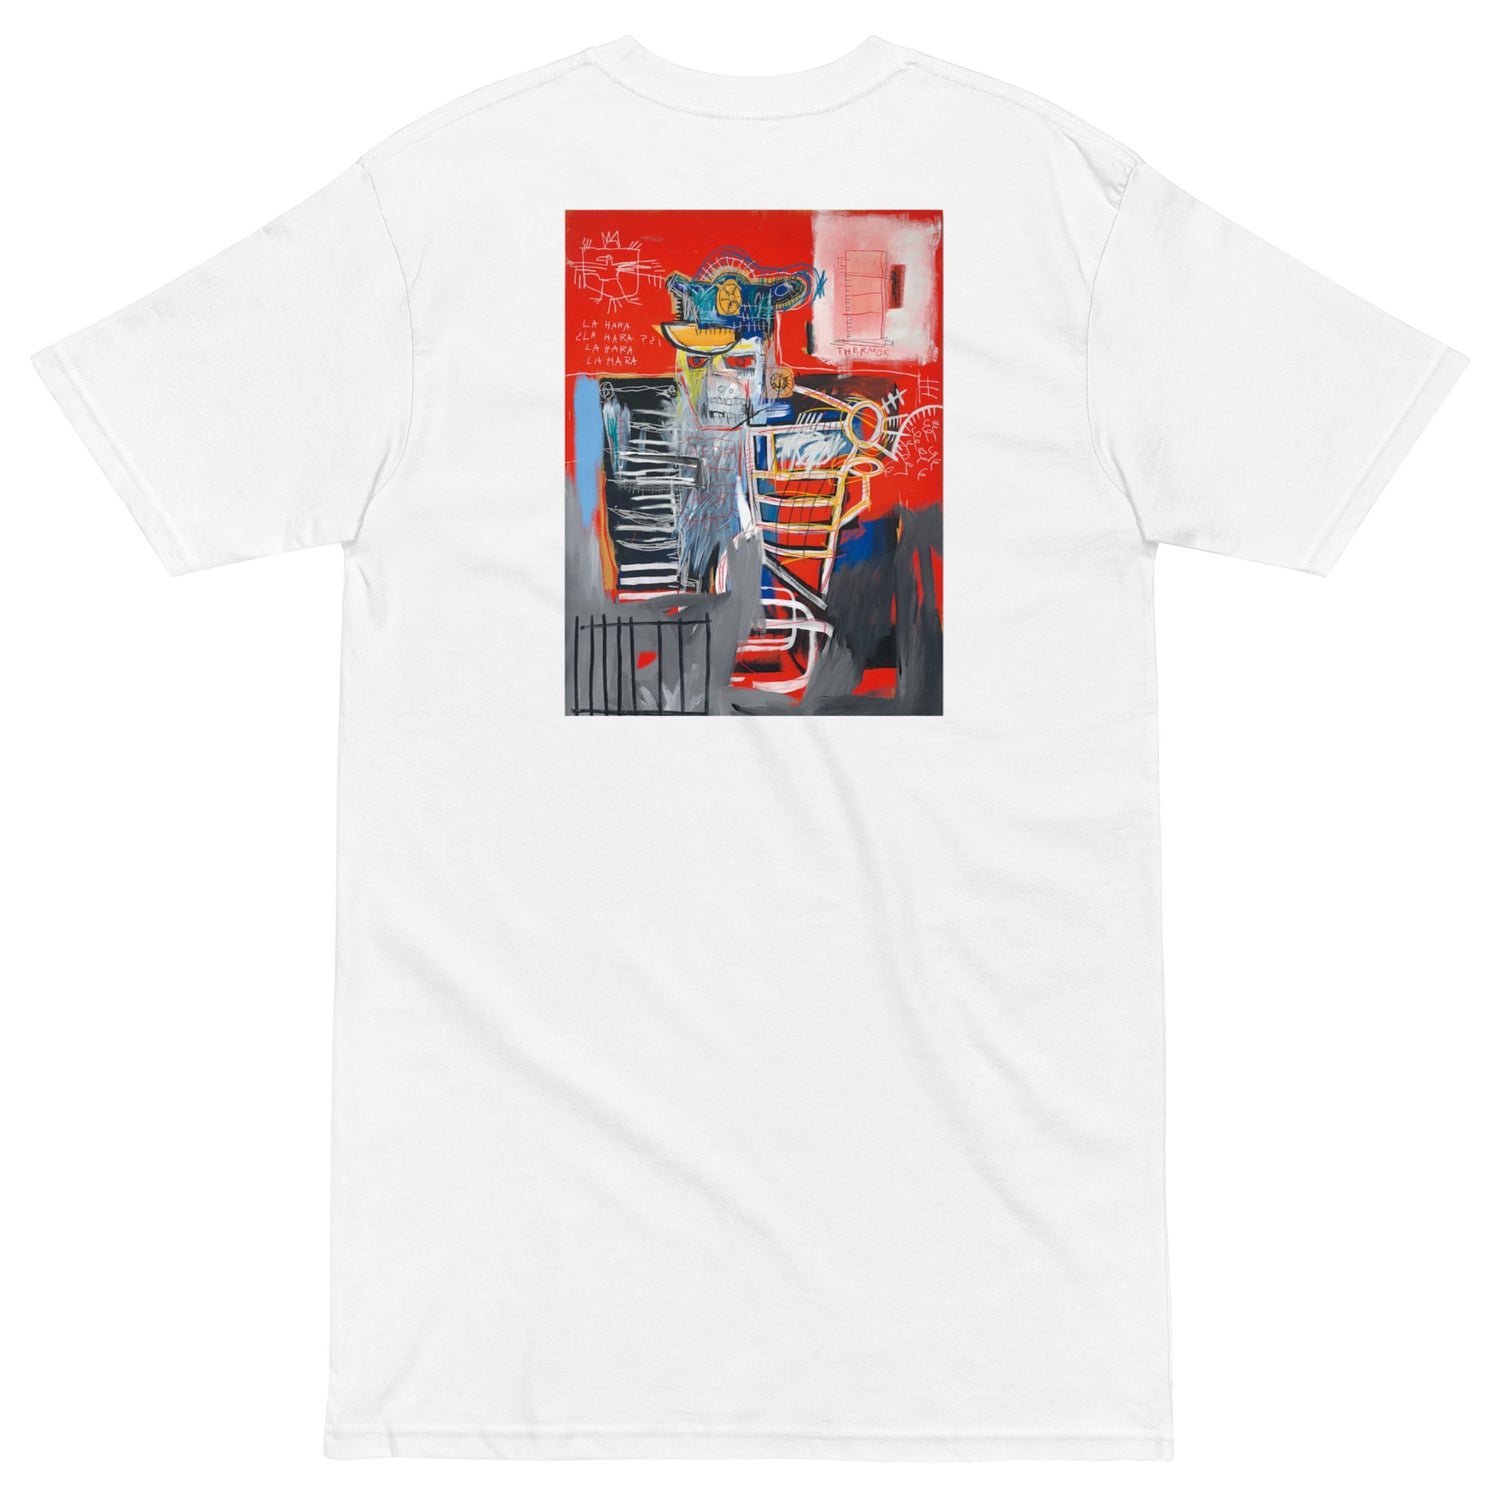 Jean-Michel Basquiat "La Hara" 1981 Artwork Embroidered + Printed Premium Streetwear White T-shirt